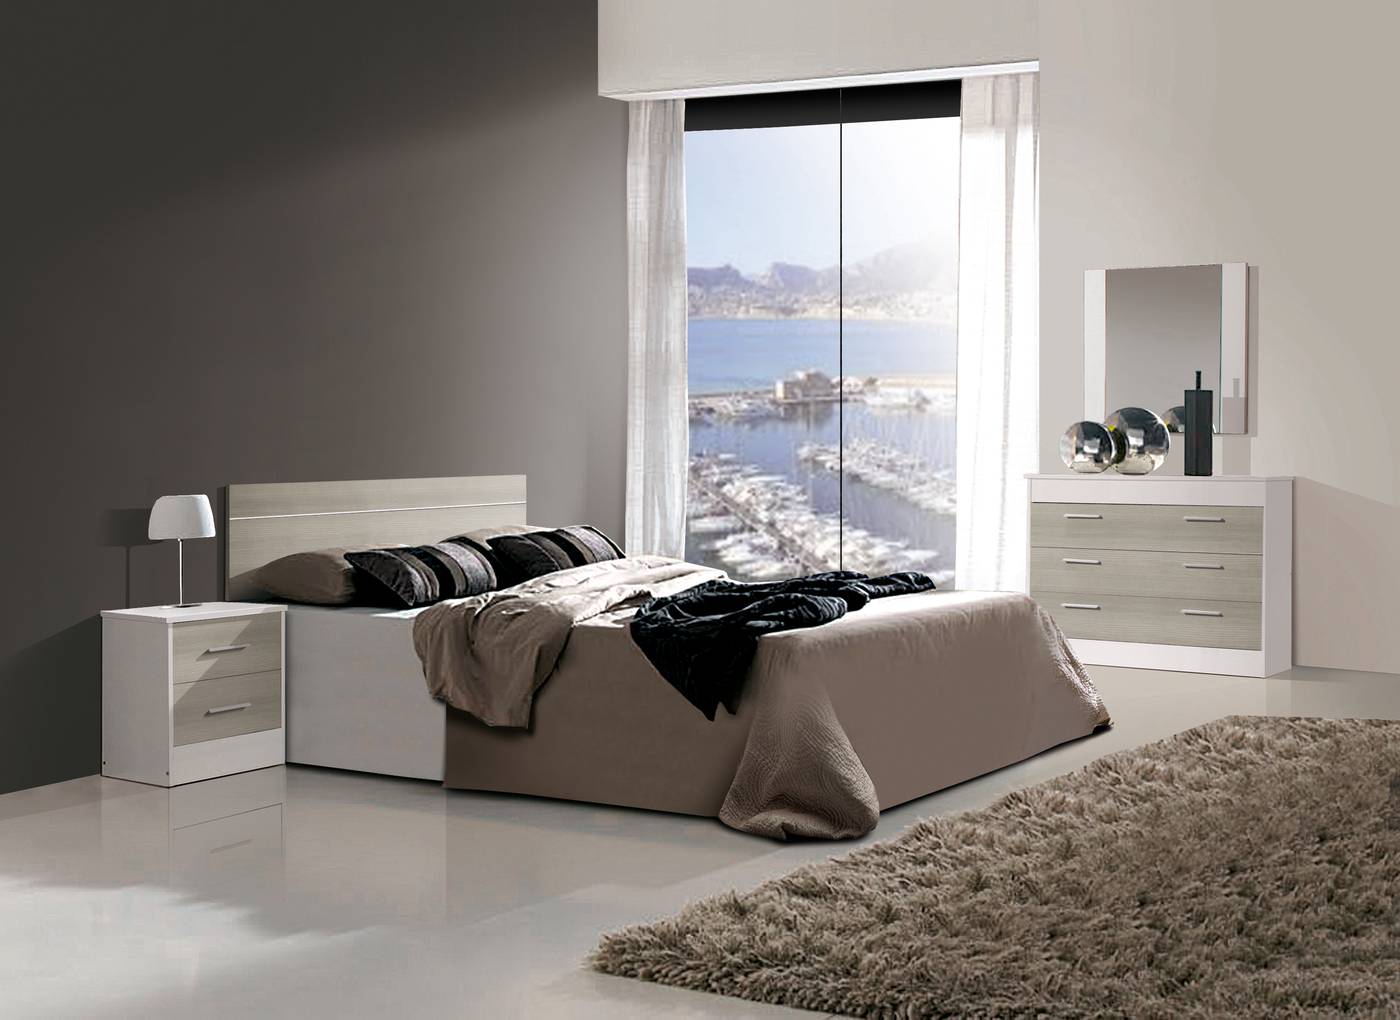 Dormitorio Moderno Blanco - Dormitorio matrimonio color blanco, roble claro o ceniza combinado con blanco